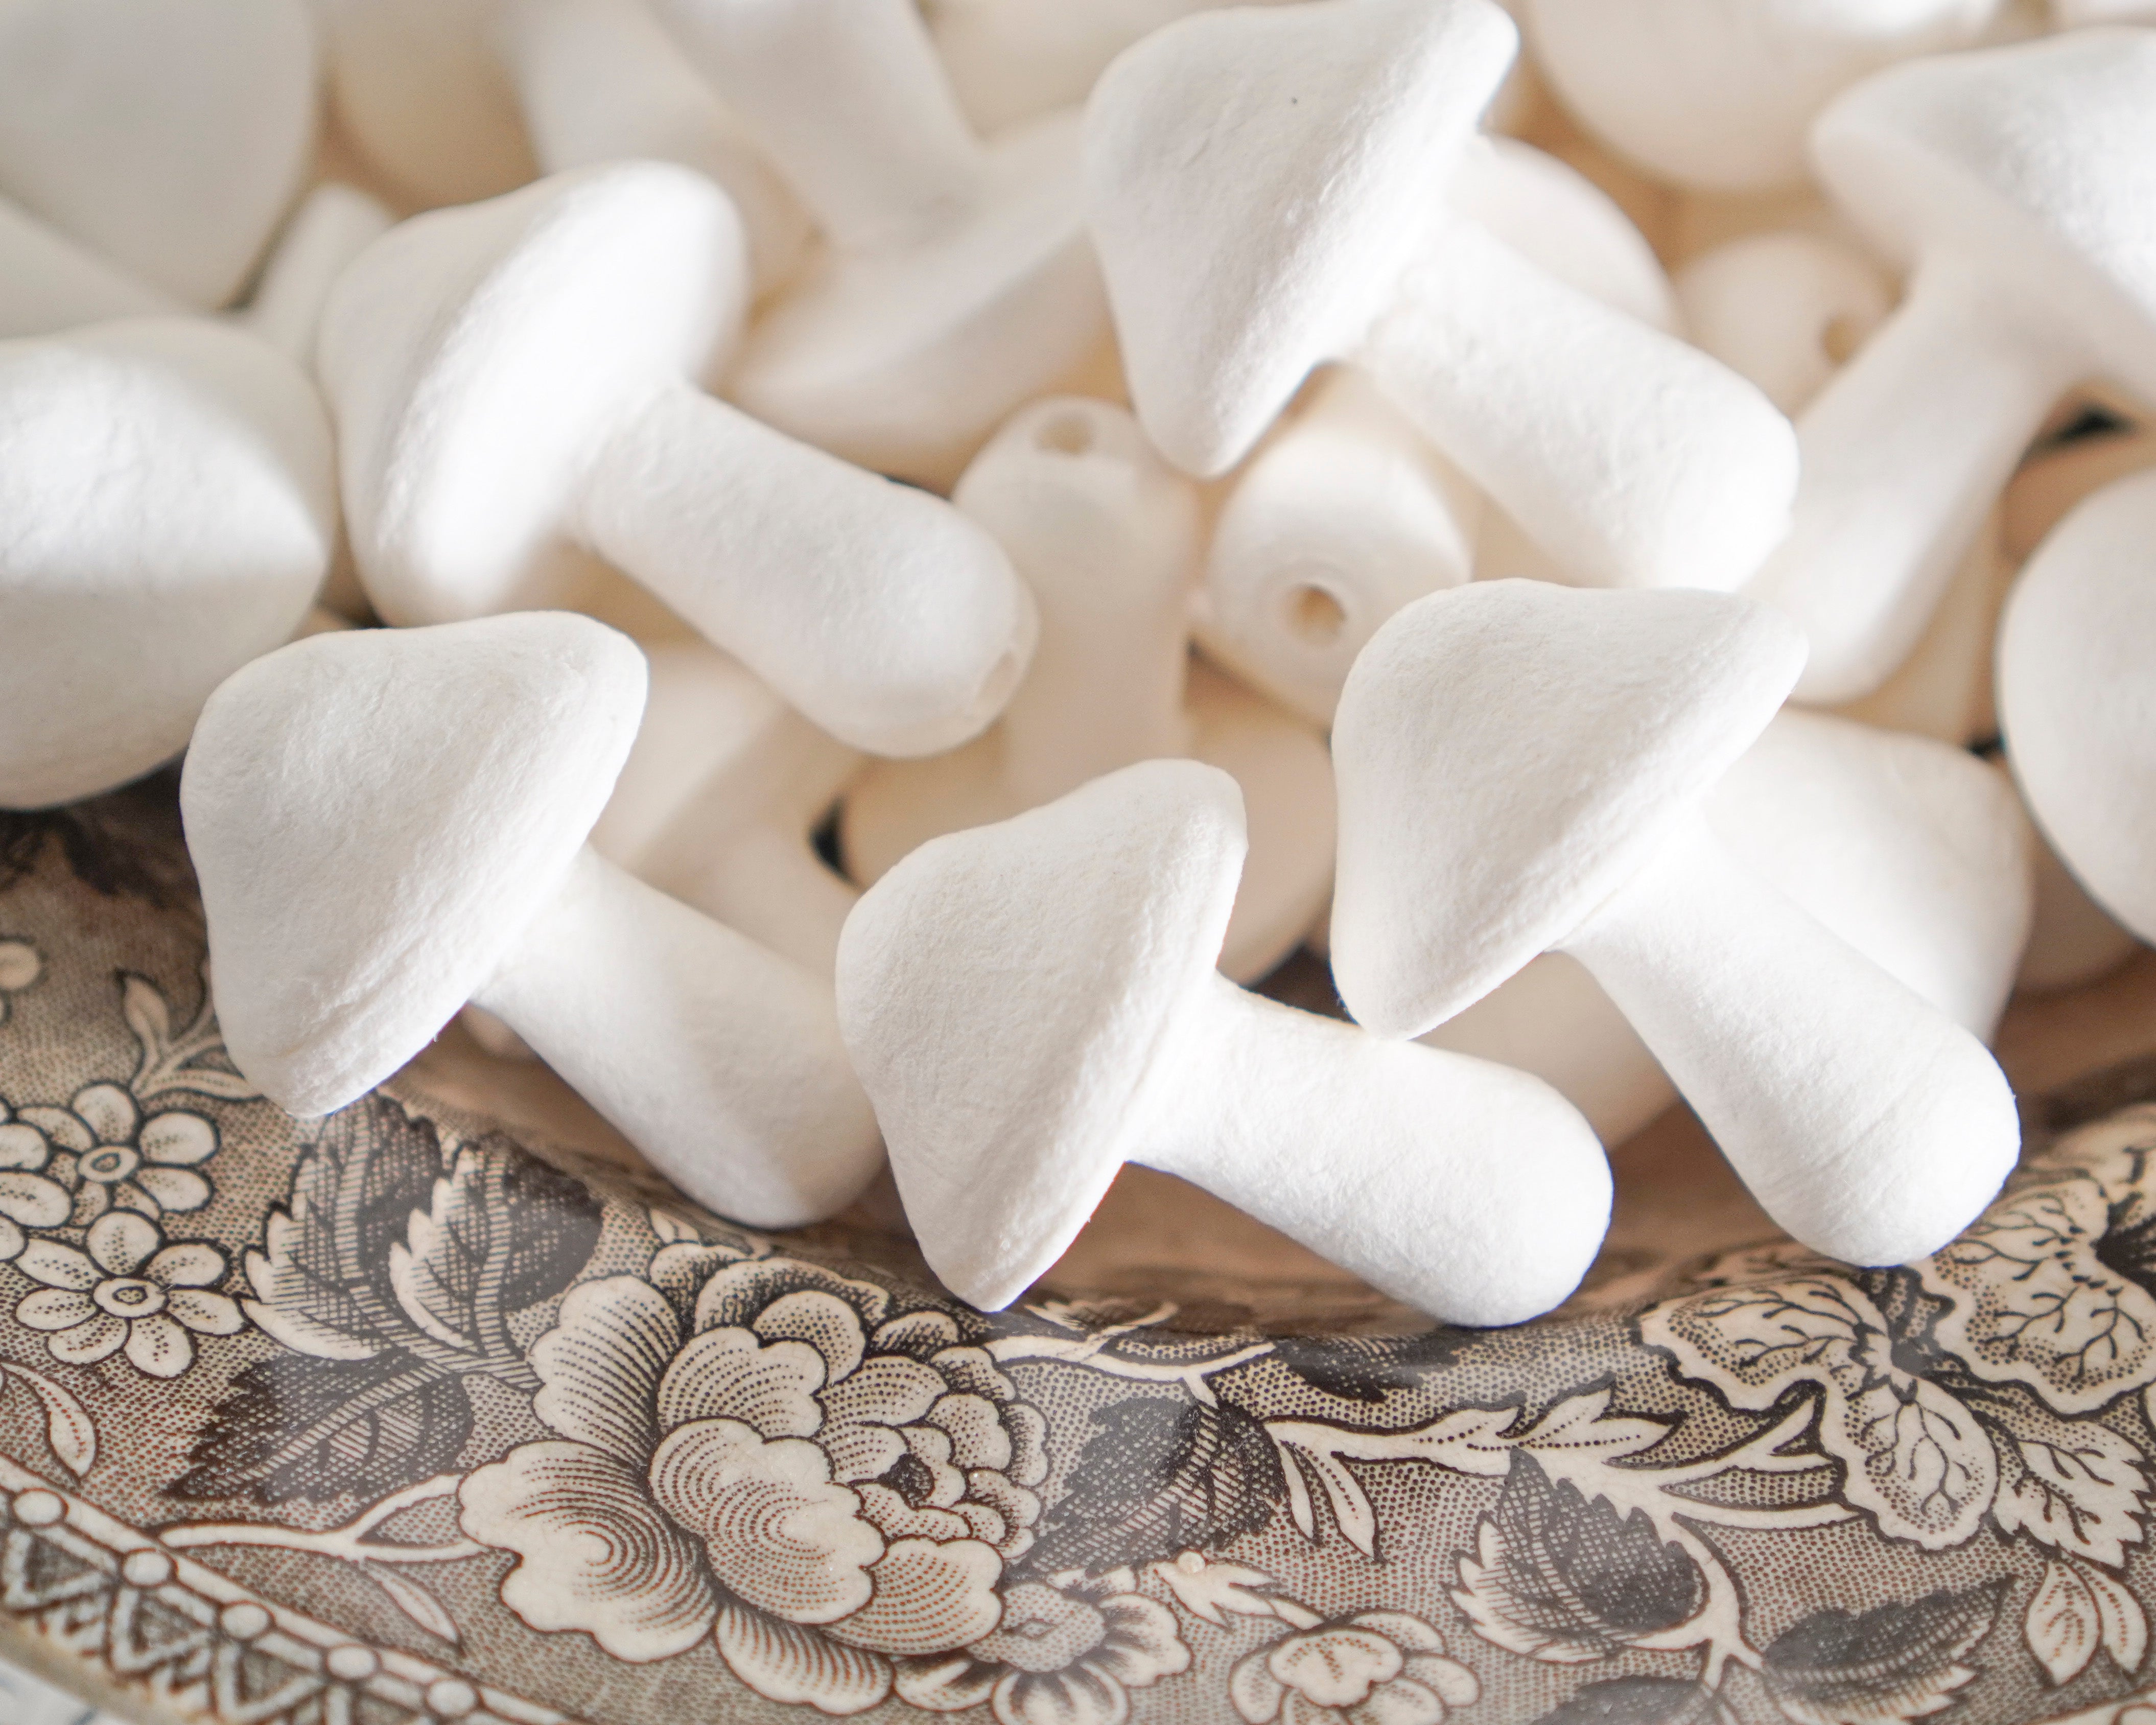 Bulk Fairy Tale Mushrooms - Vintage-Style Spun Cotton Craft Shapes, 50 Pcs.